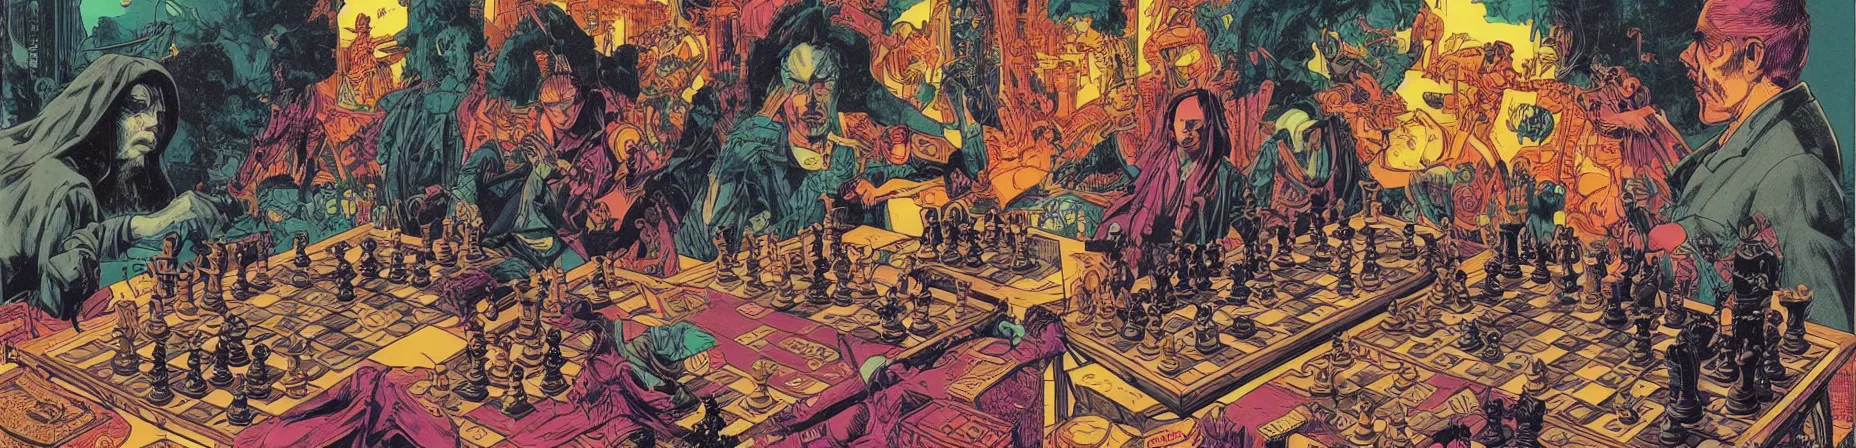 Prompt: chess set, taro deck card king and psychedelic grainshading print by moebius, richard corben, wayne barlowe, cyberpunk comic cover art, galactic dark colors